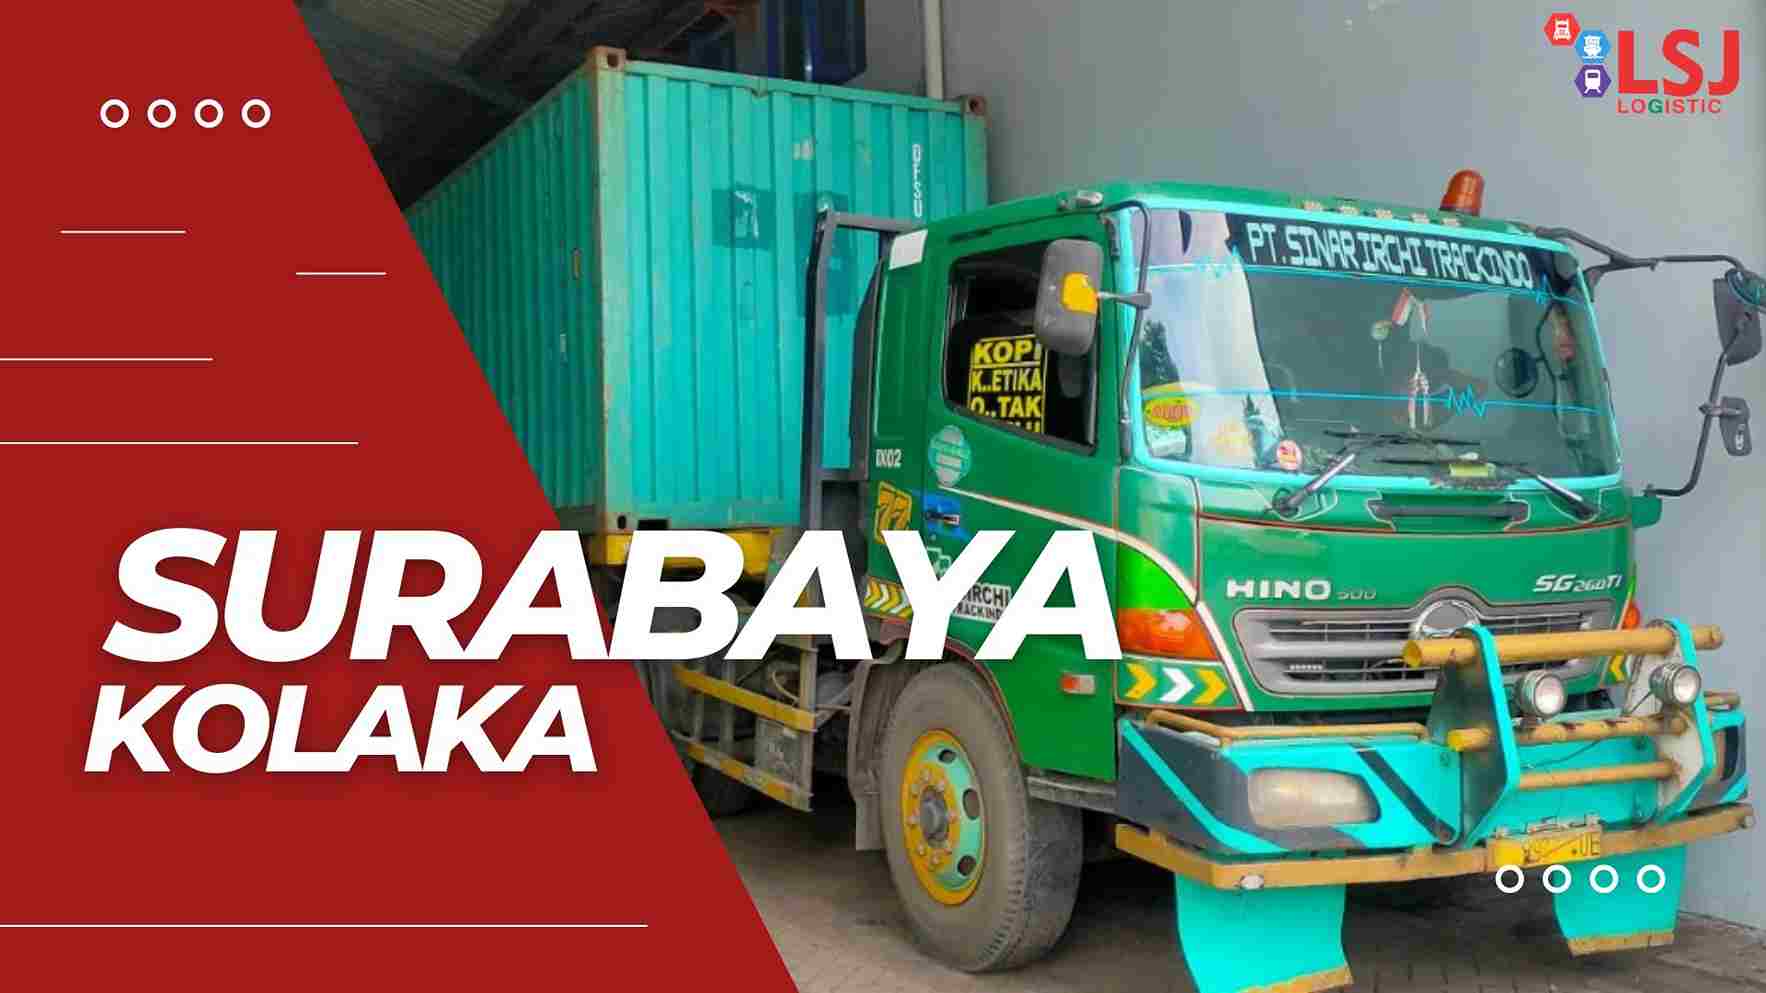 Ongkos Kirim Container Surabaya Kolaka